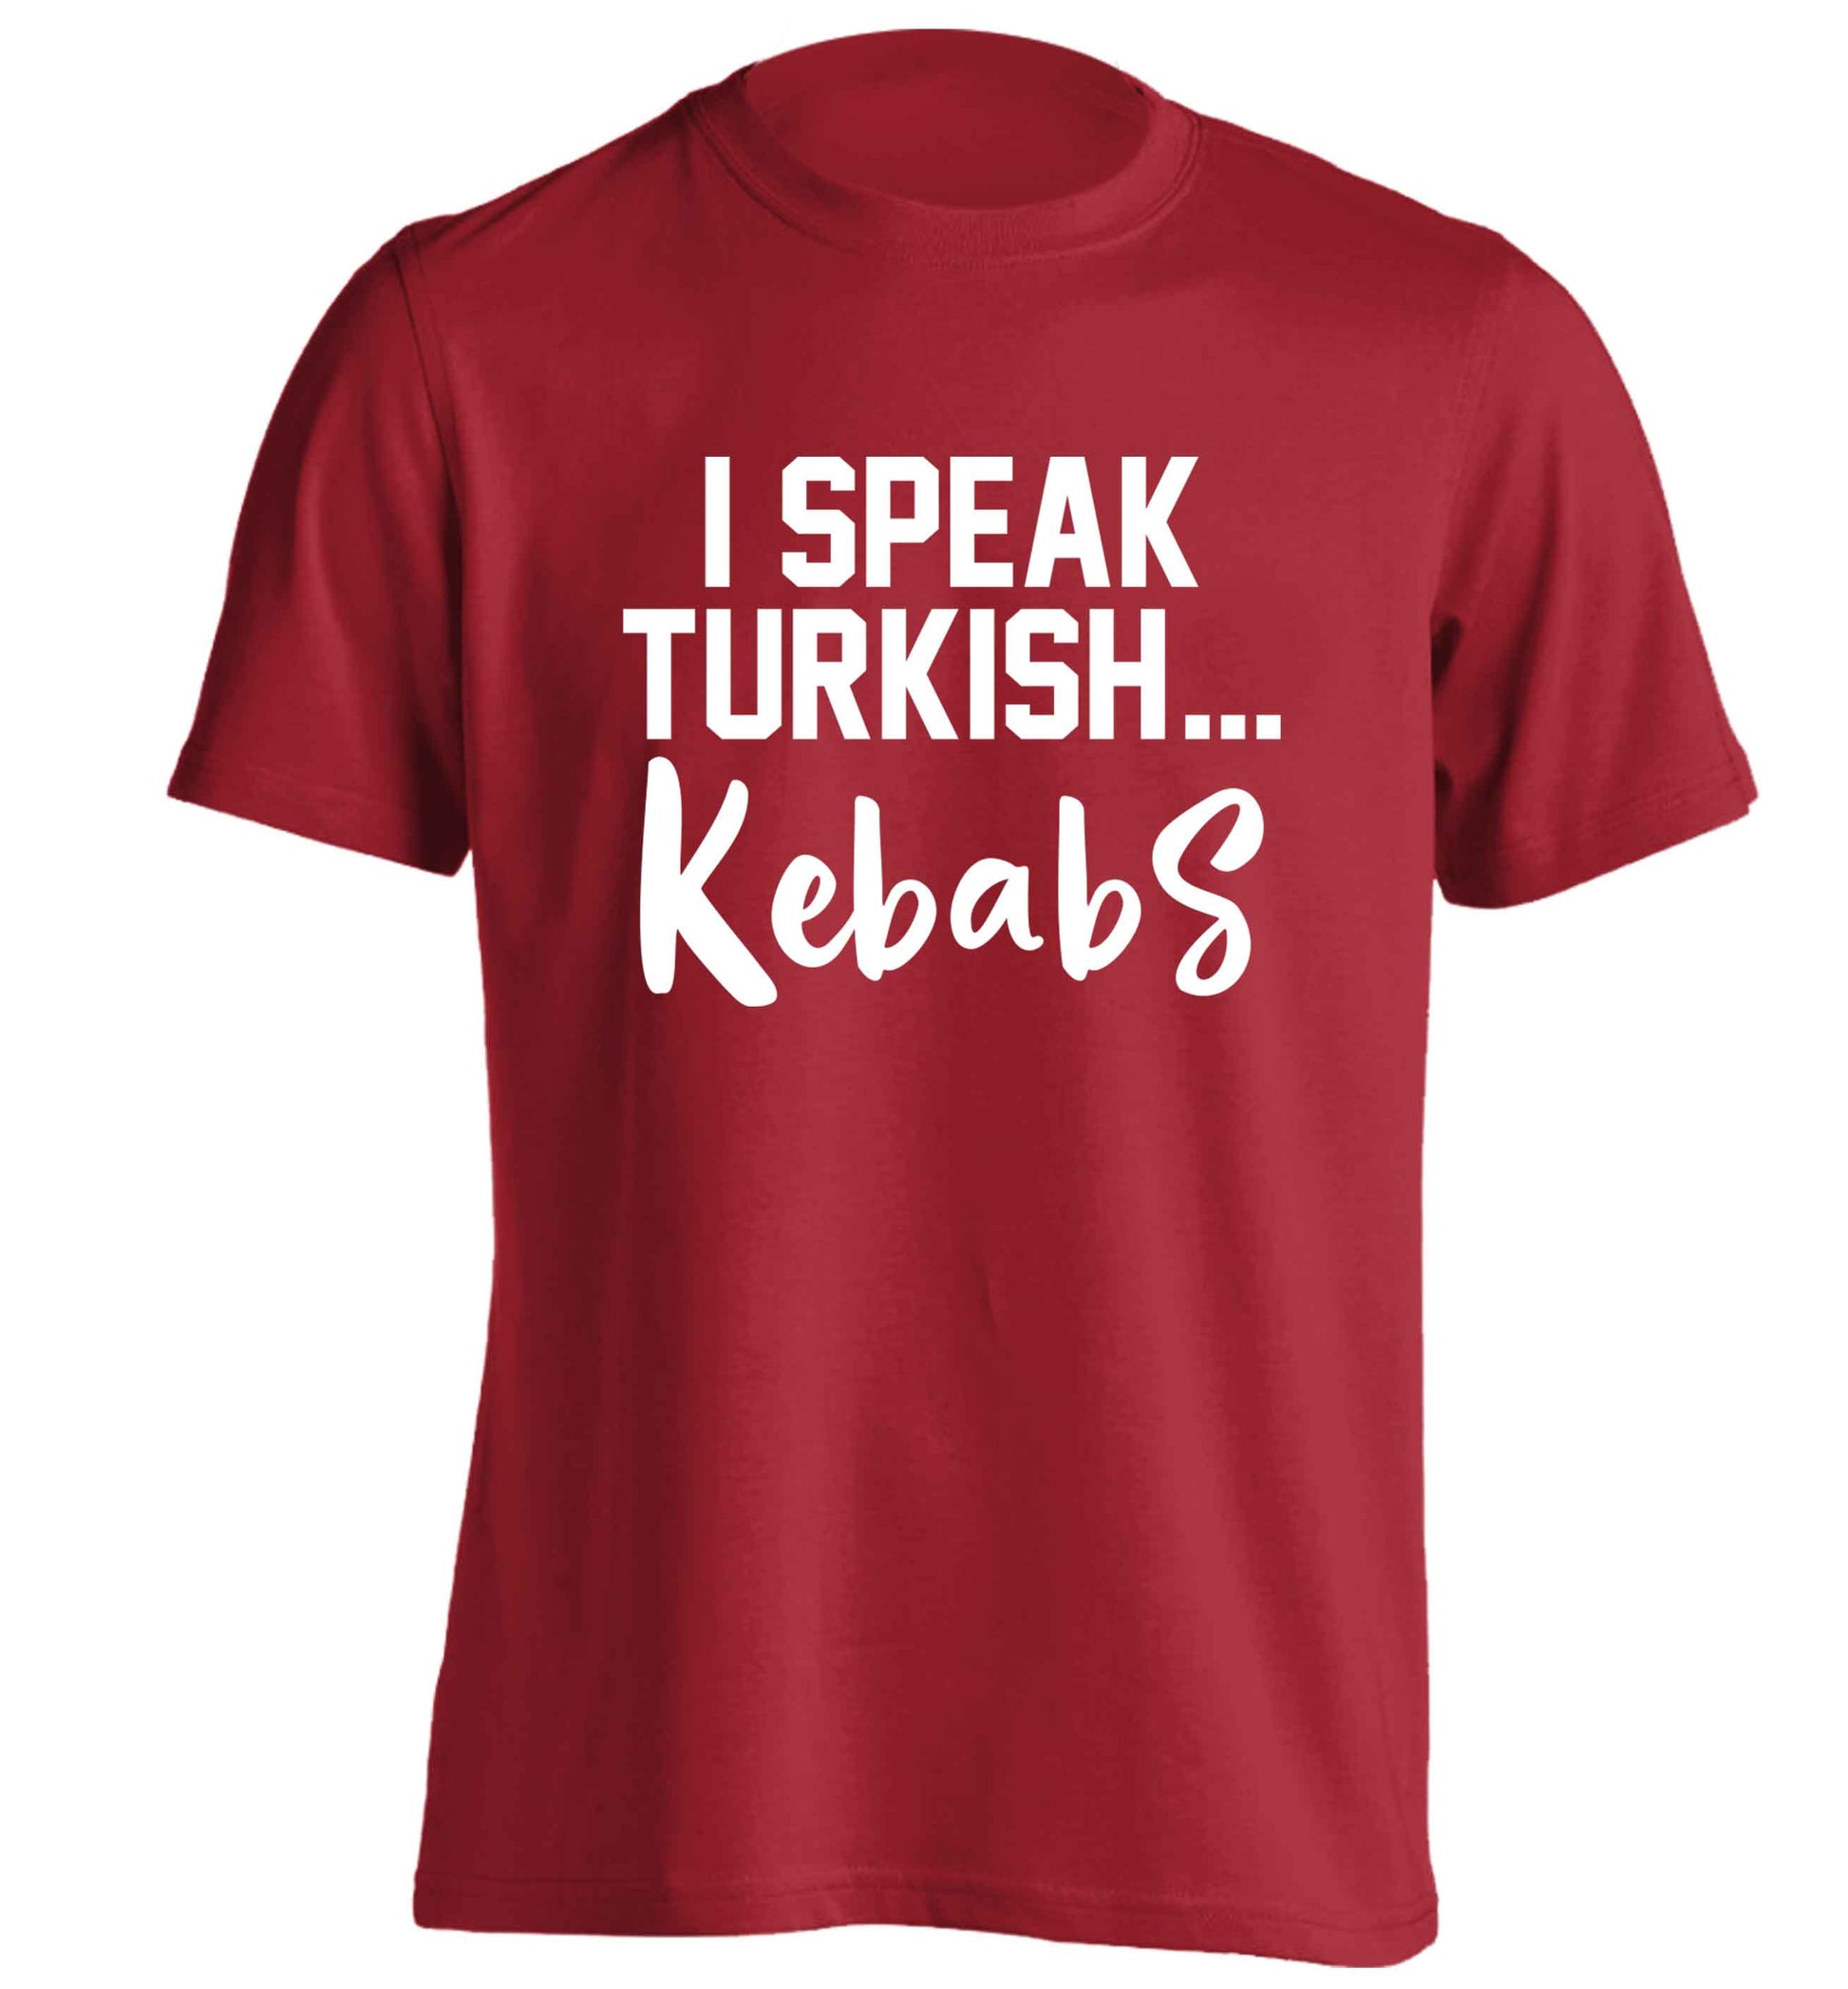 I speak Turkish...kebabs adults unisex red Tshirt 2XL